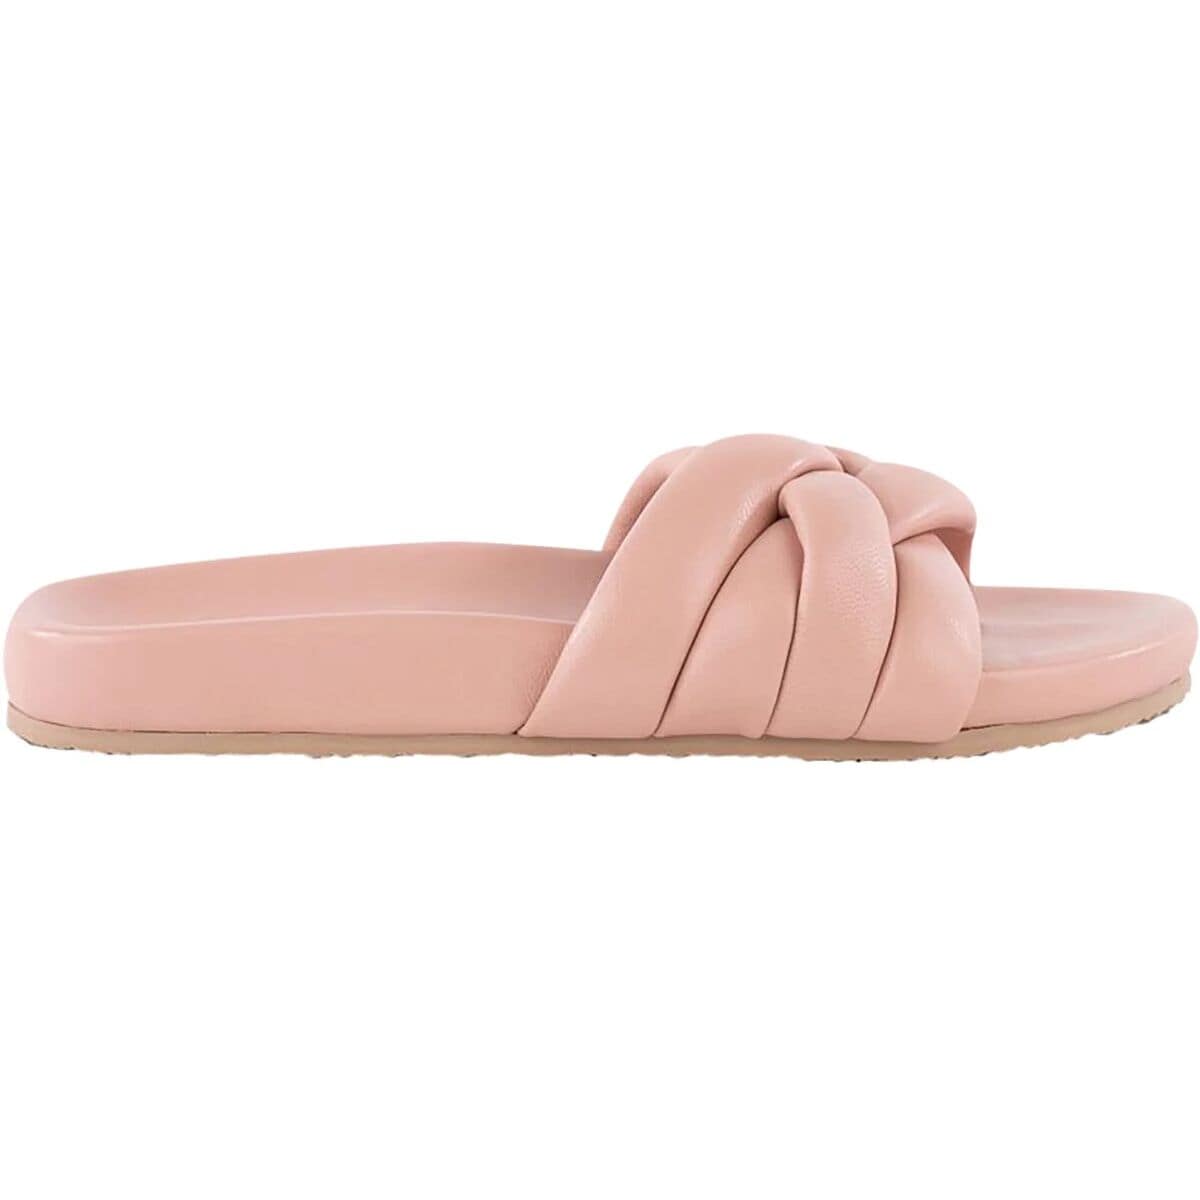 Seychelles Footwear Low Key Glow Up Sandal - Women's Blush Leather, 10.0 product image